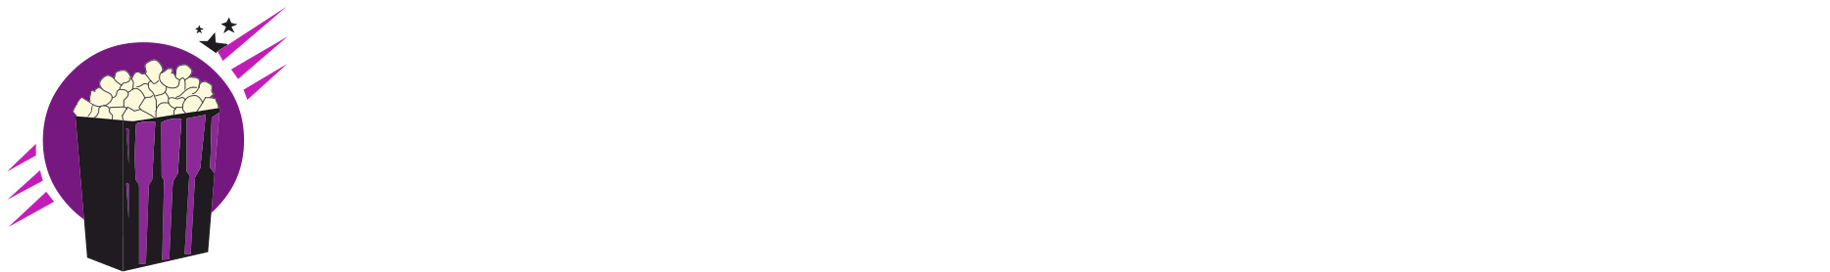 popcorn infotech logo

